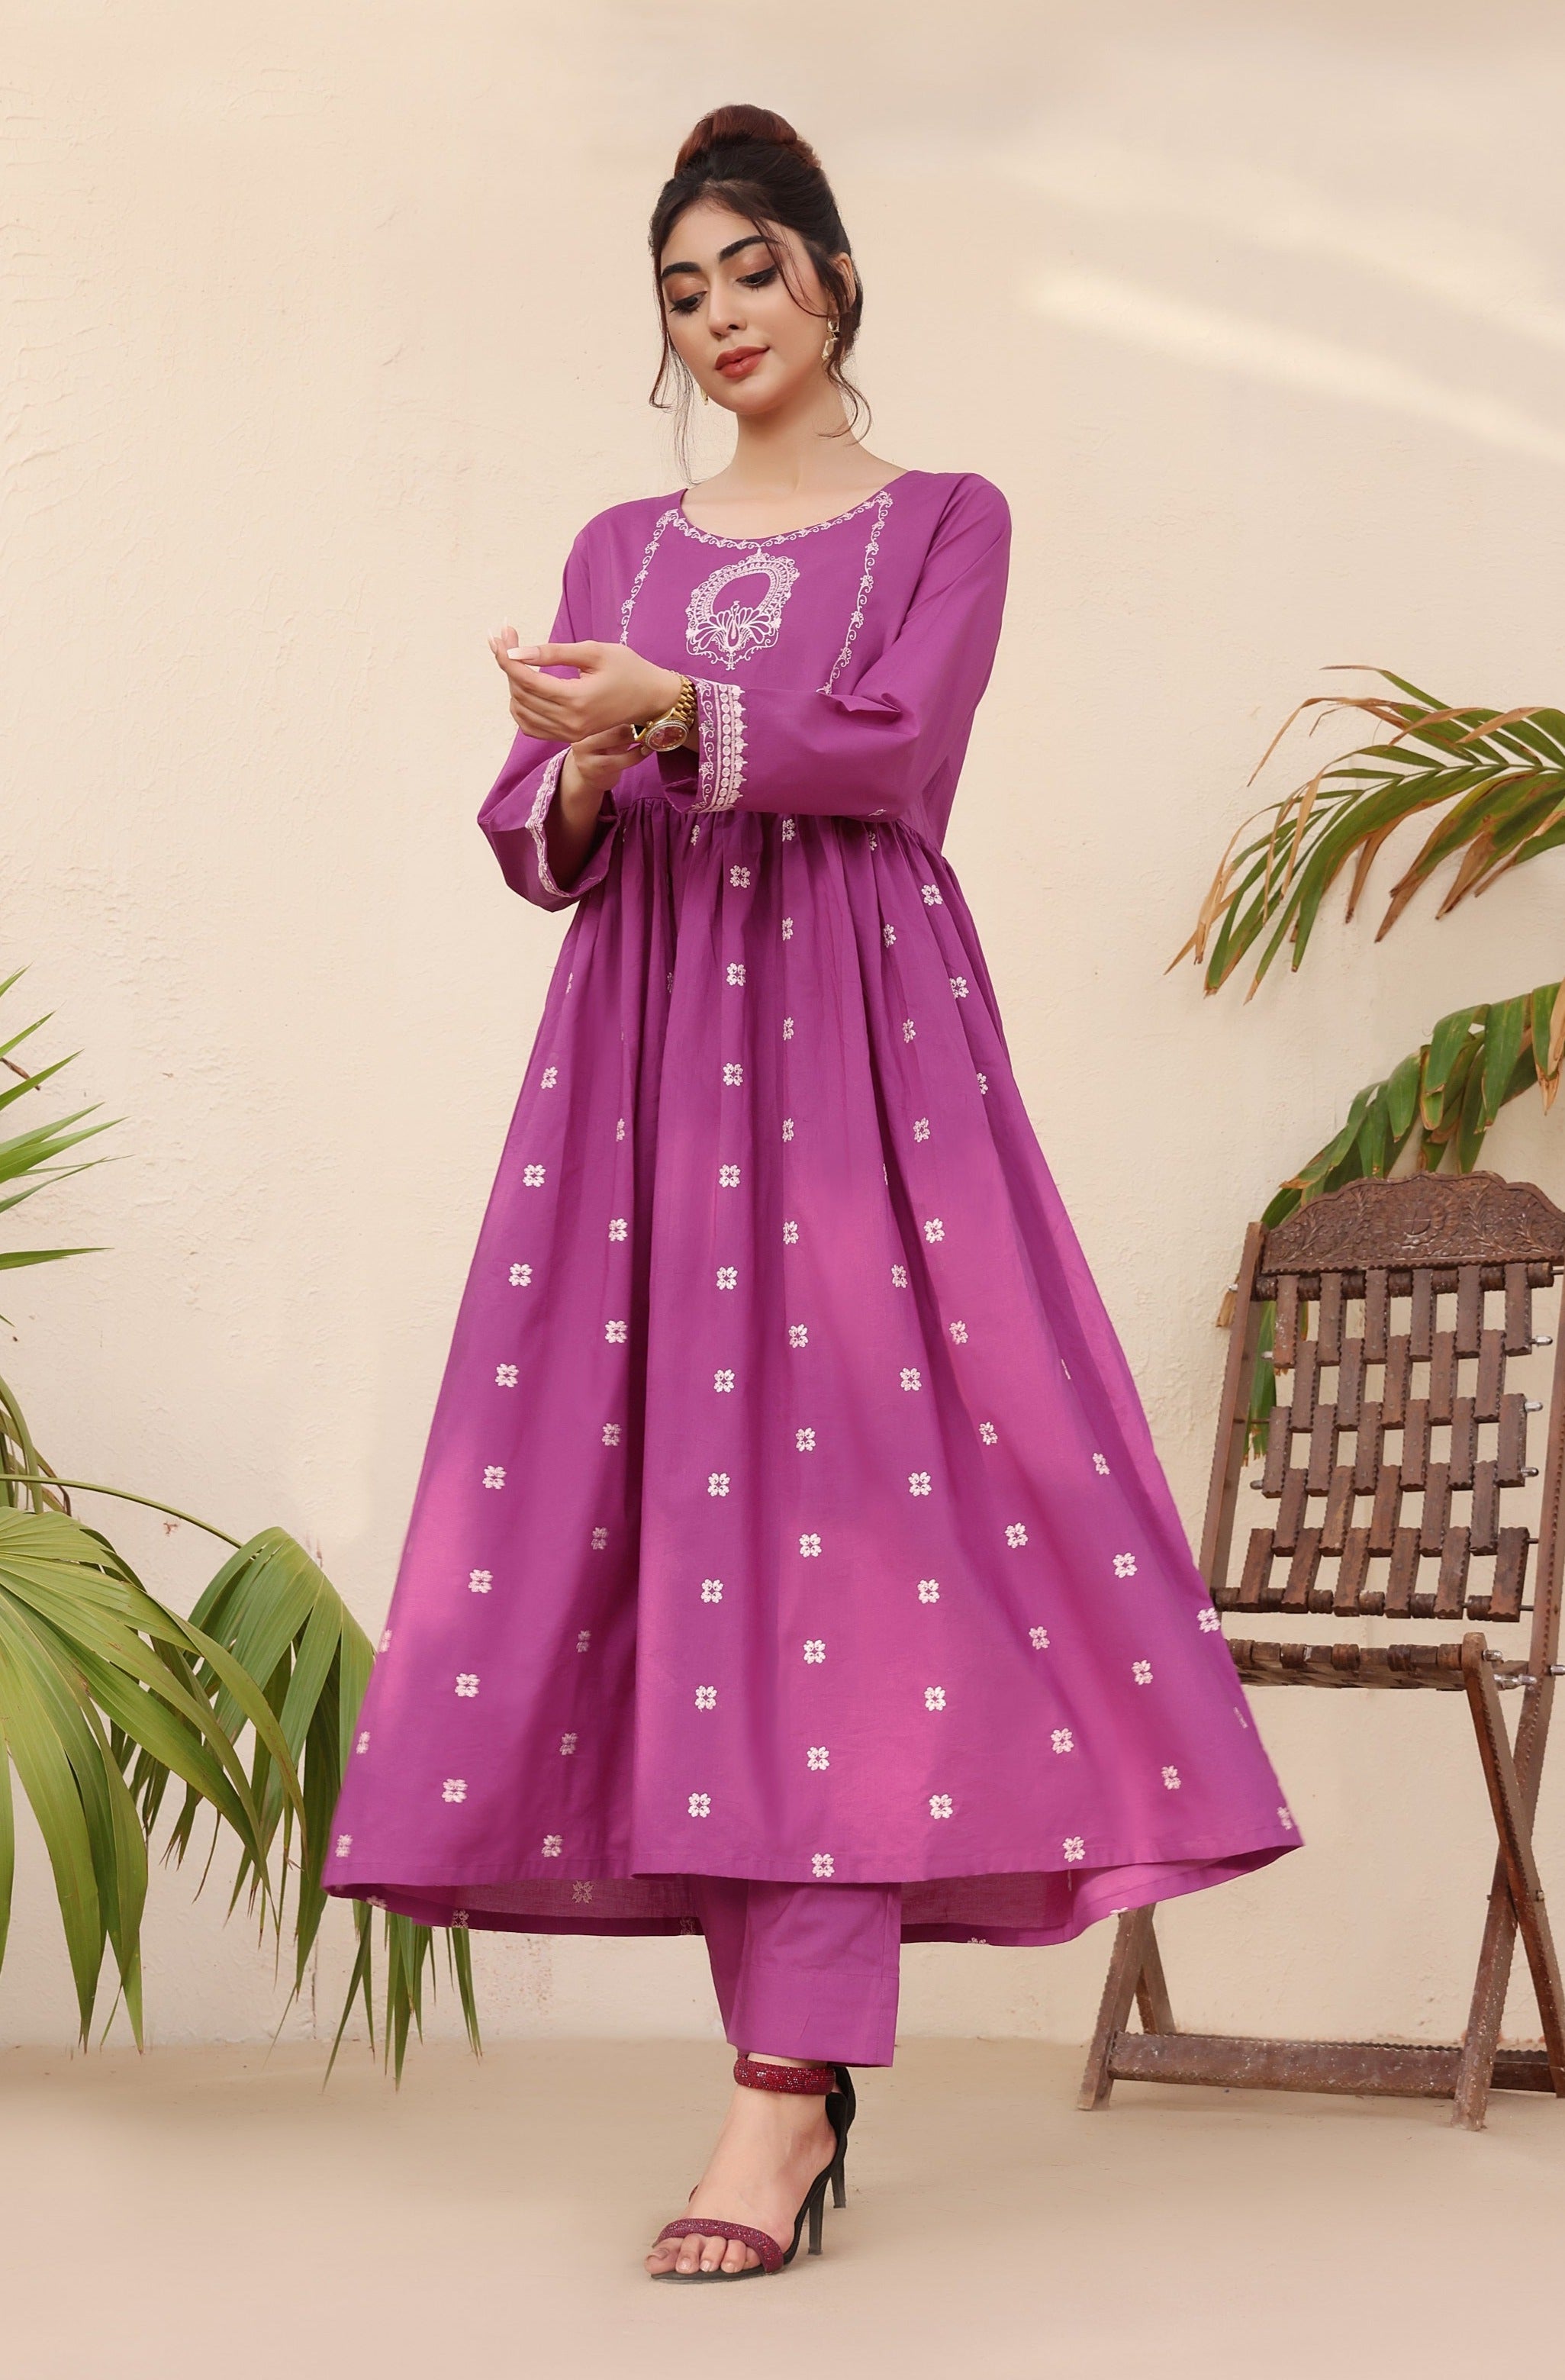 Bareeze | Pakistan's Leading Online Clothing Store for Women - Bareeze